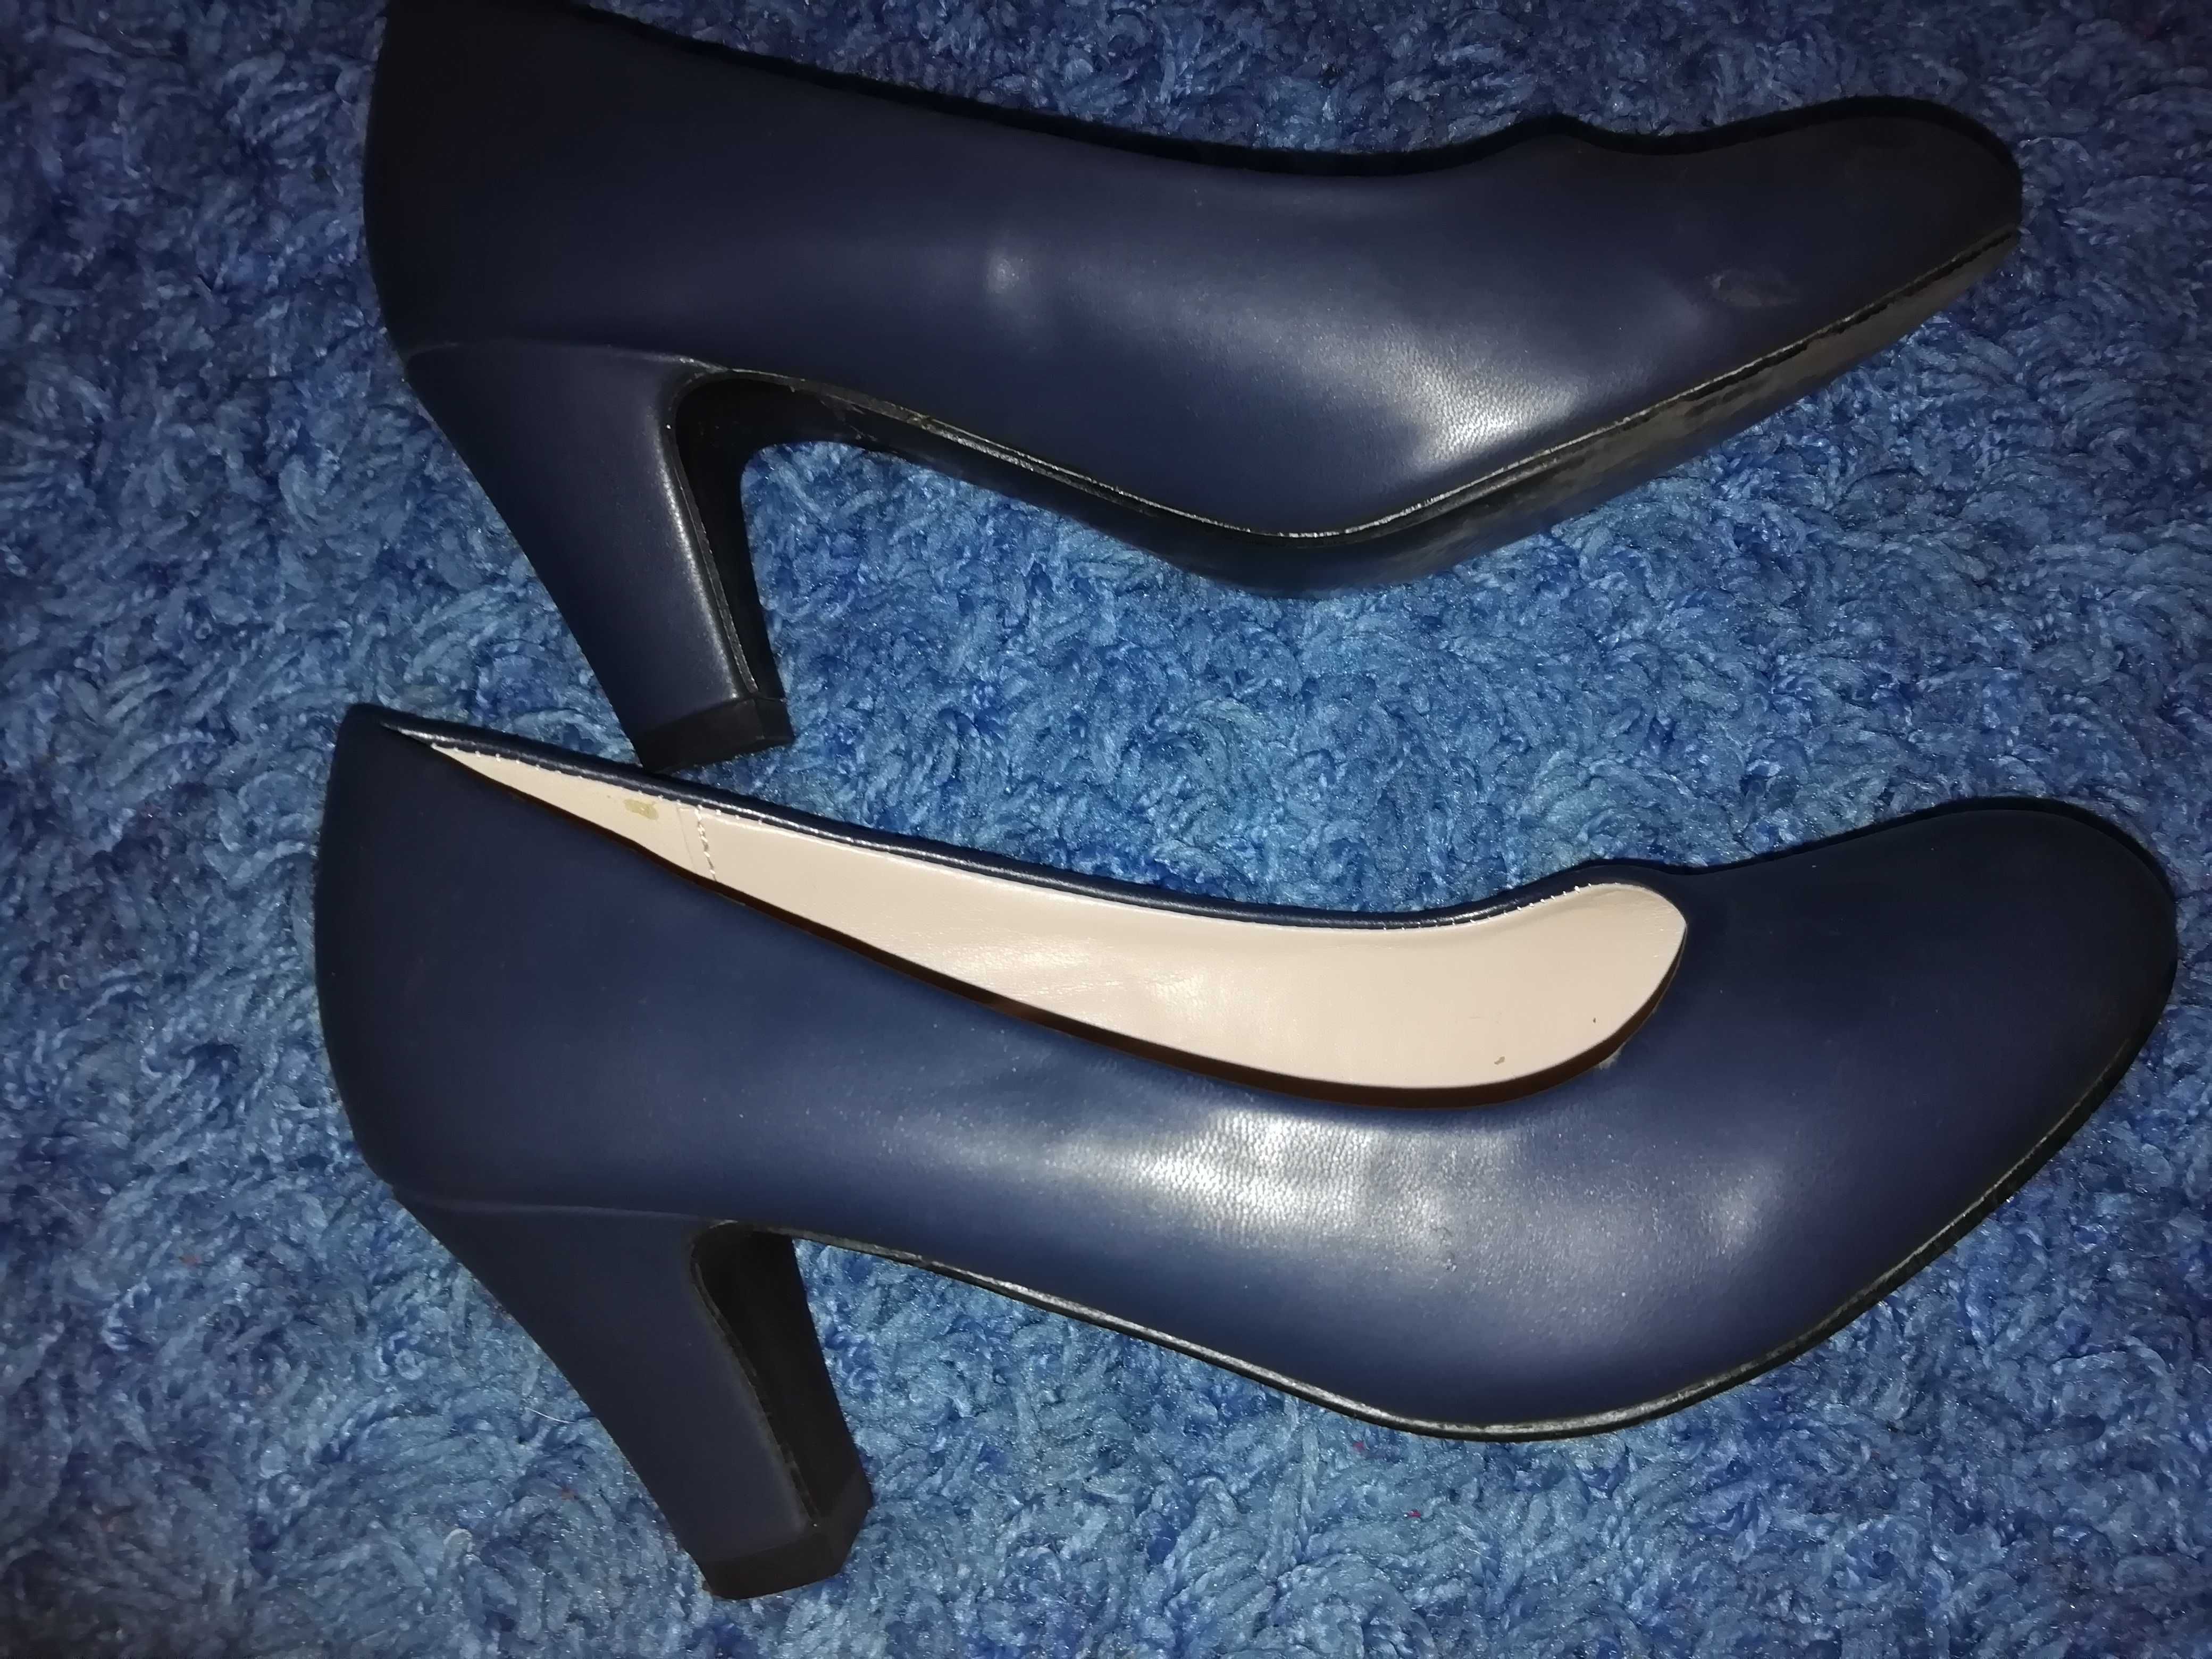 Pantofi negri și bleumarin, diferite modele